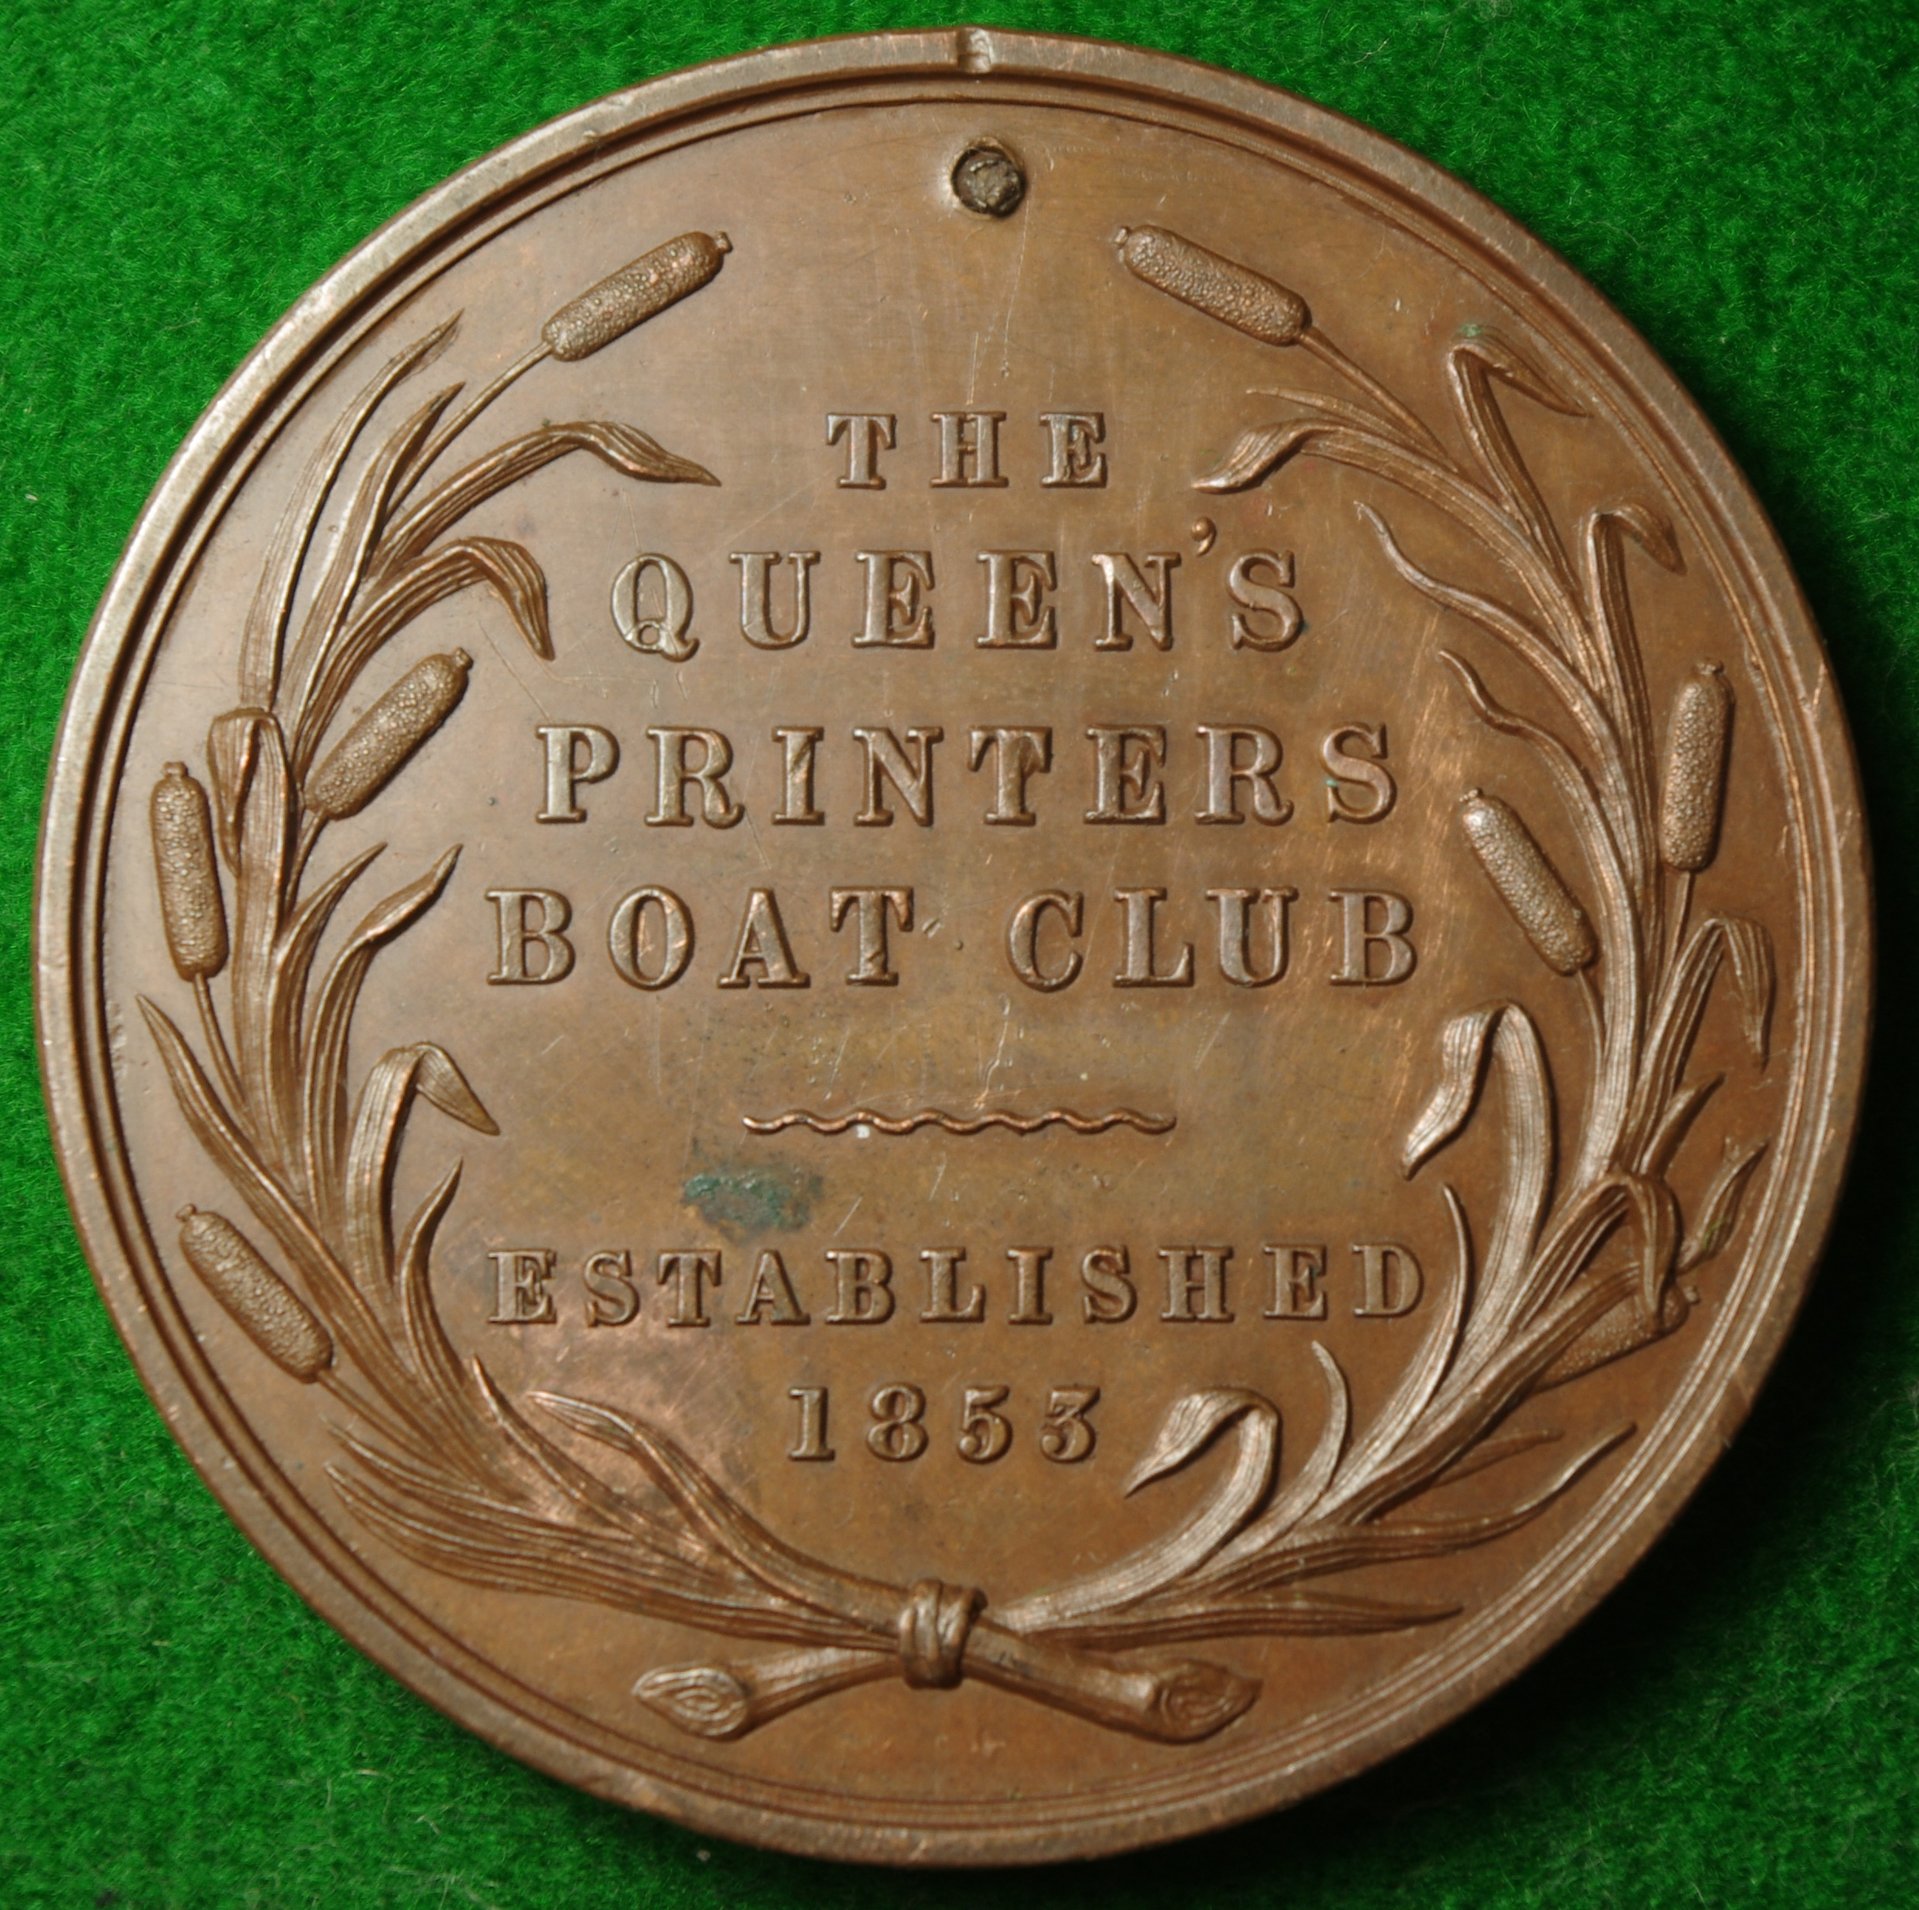 Boat Club medal 2.JPG